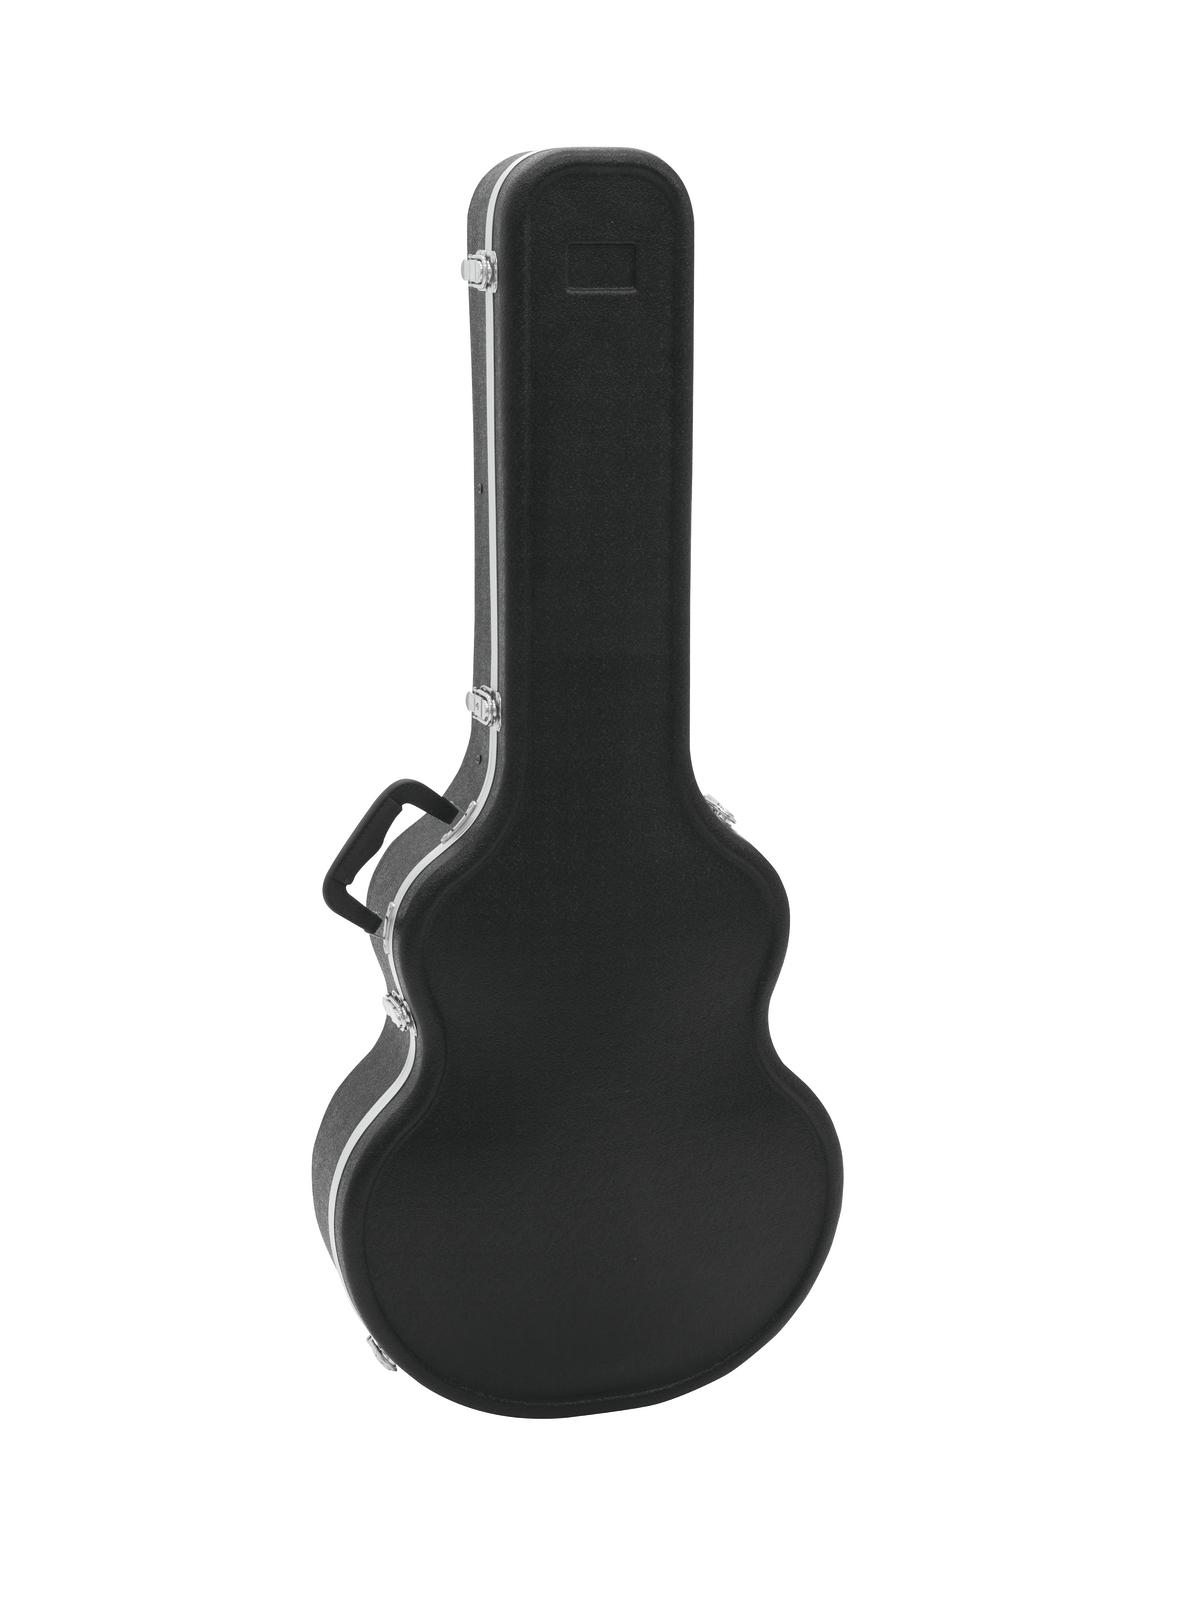 Køb ABS Hardcase / Kuffert til Jumbo western-guitar - Sort - Pris 1049.00 kr.